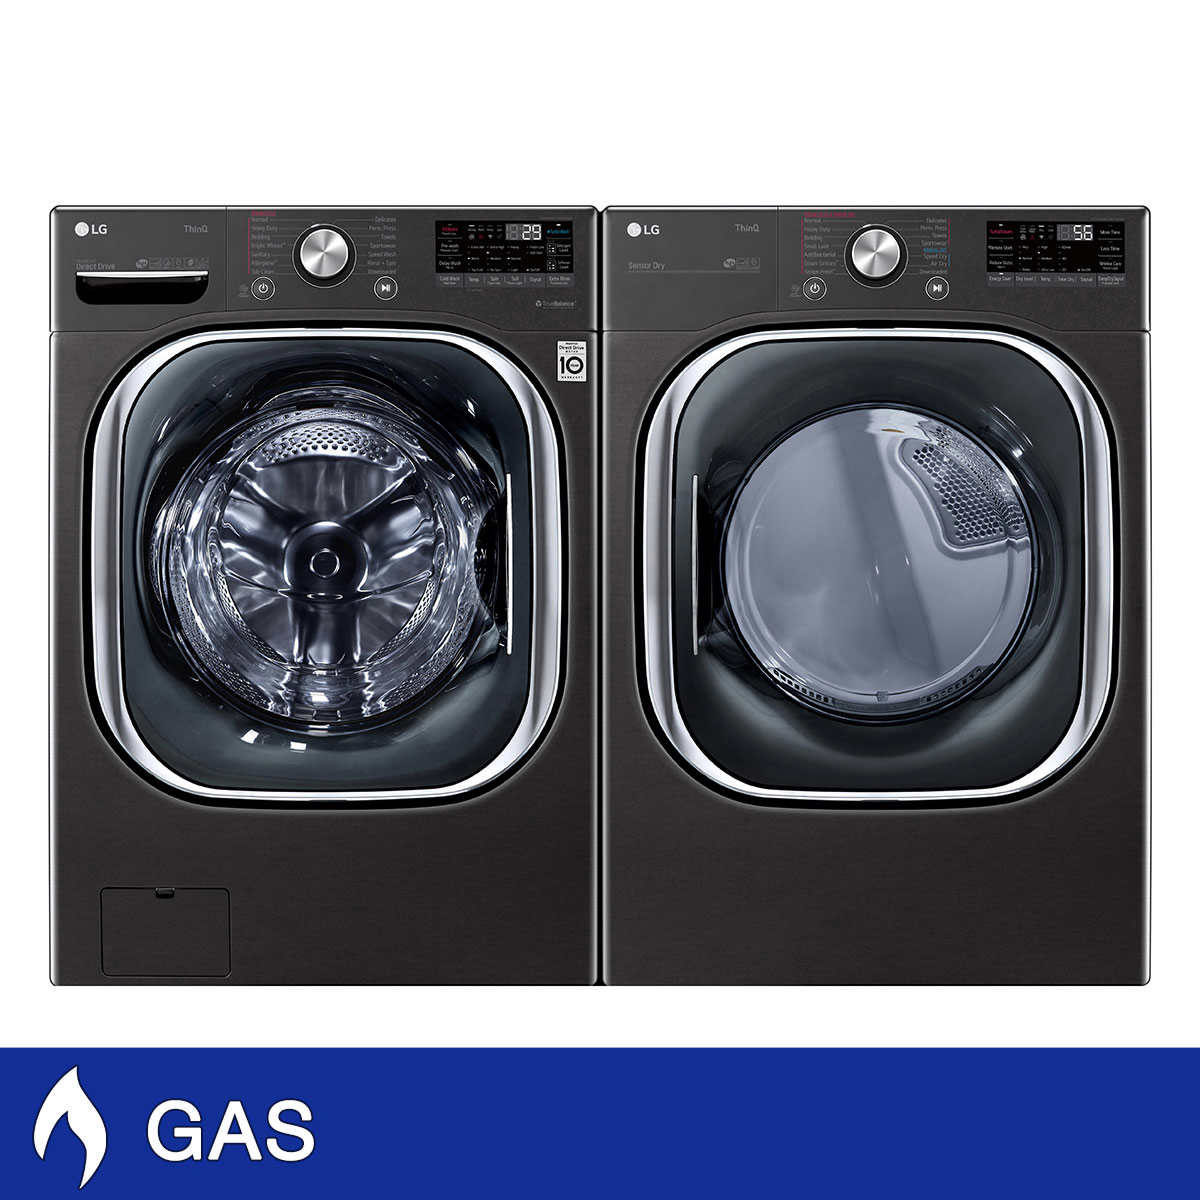 LG washer & dryer WM4500HBA (gas dryer only) DLGX4501B $999.97 at Costco YMMV